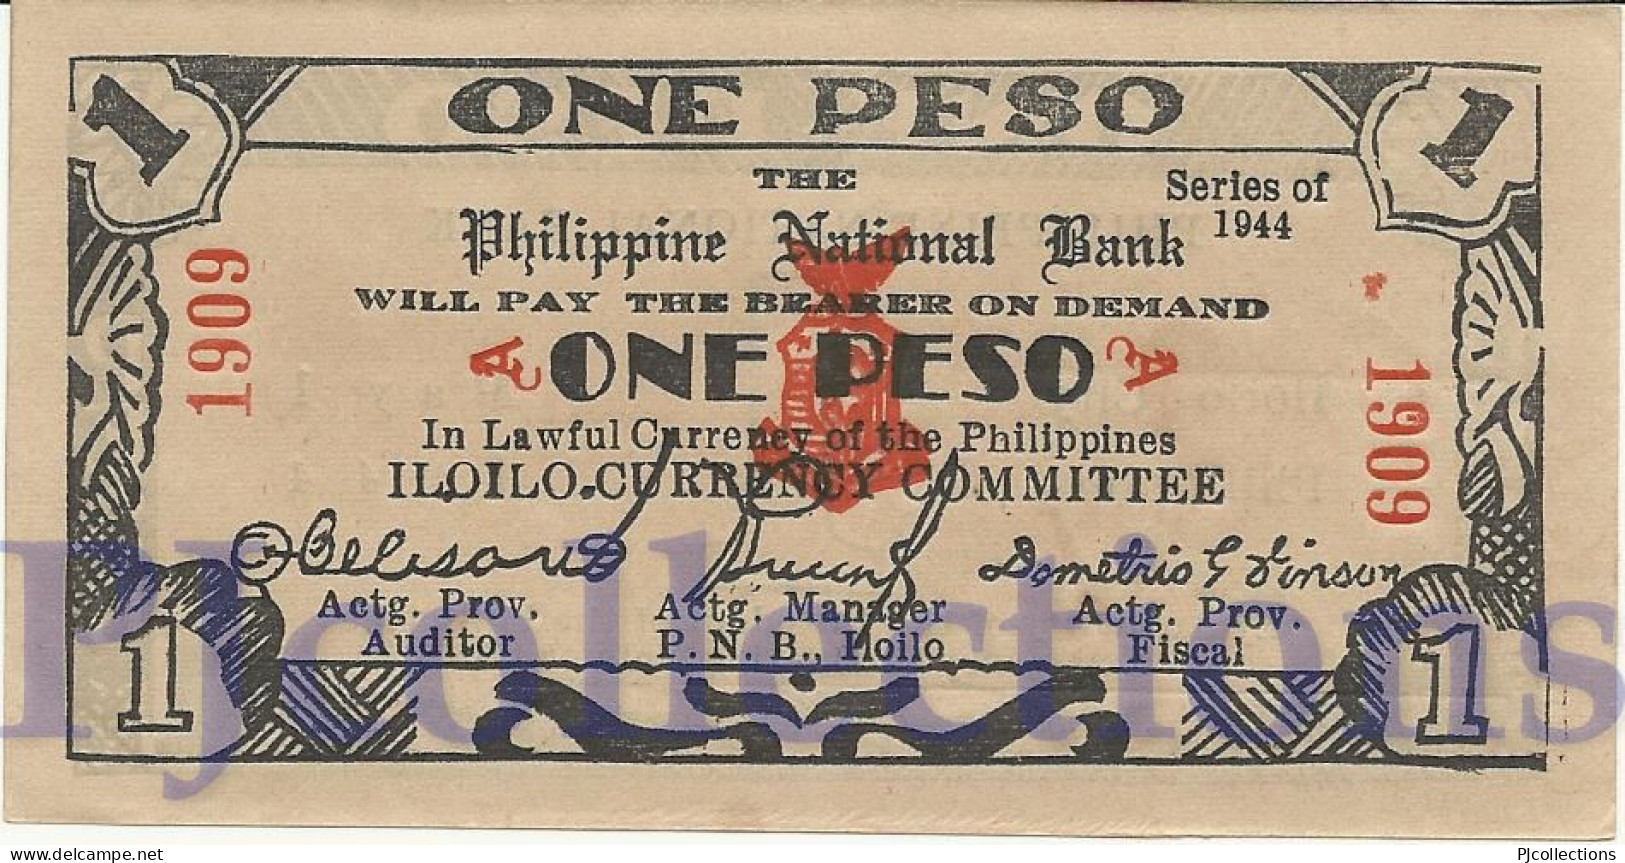 PHILIPPINES 1 PESO 1944 PICK S339 AUNC EMERGENCY BANKNOTE - Philippinen